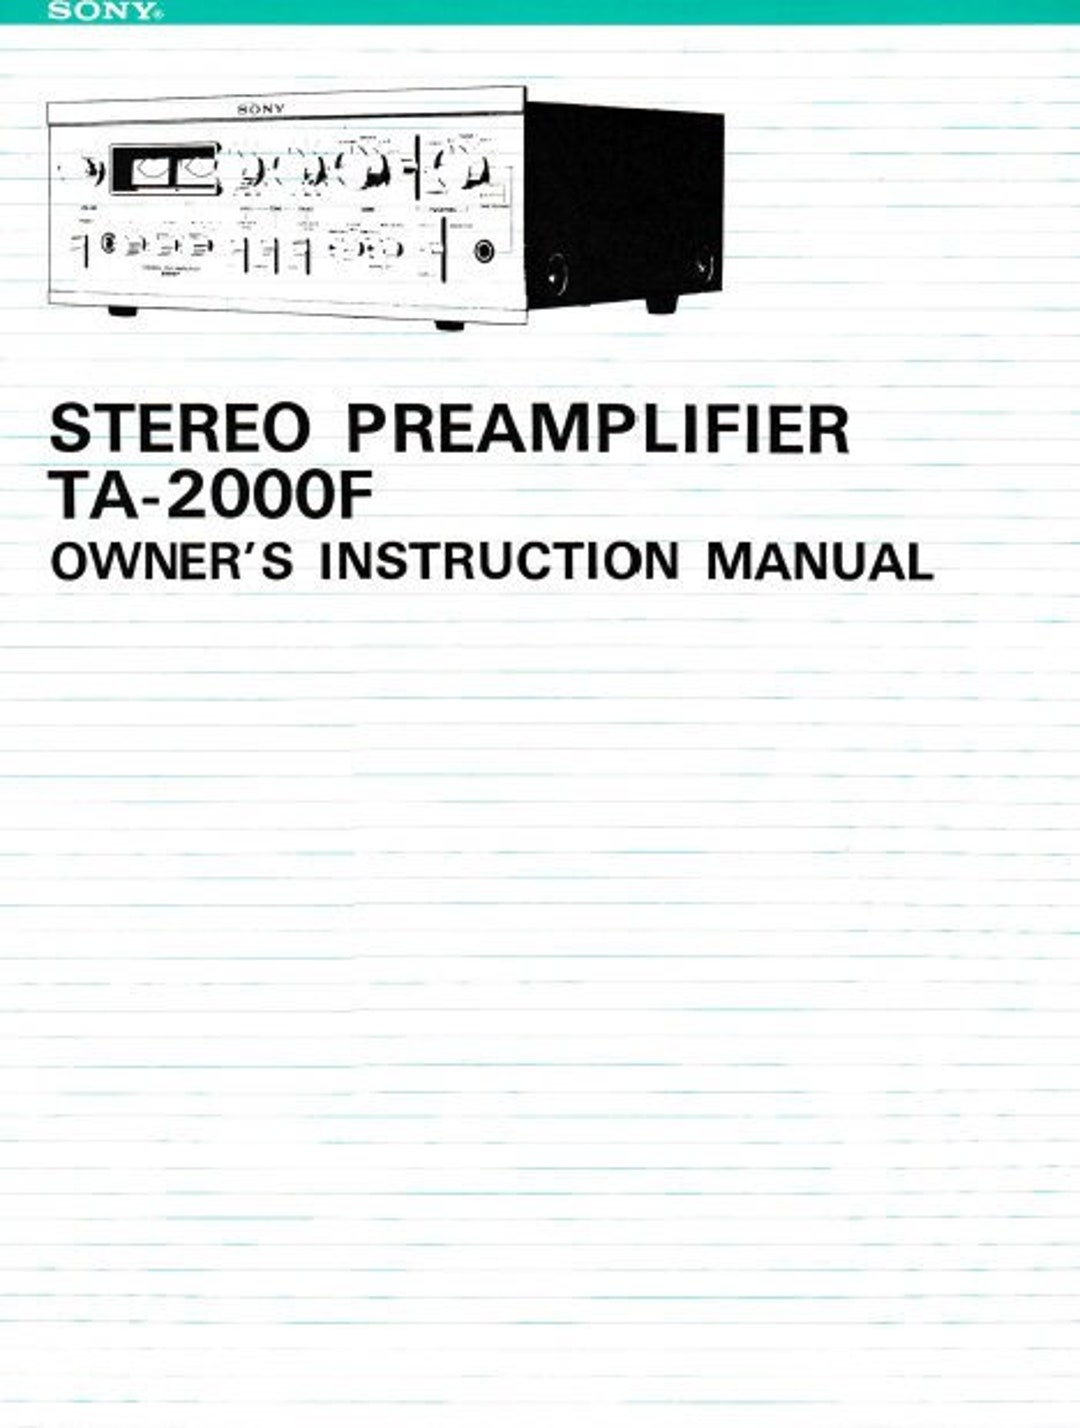 Instruction Manual 1672 2 Speed Dremel Scroll 16 Saw 